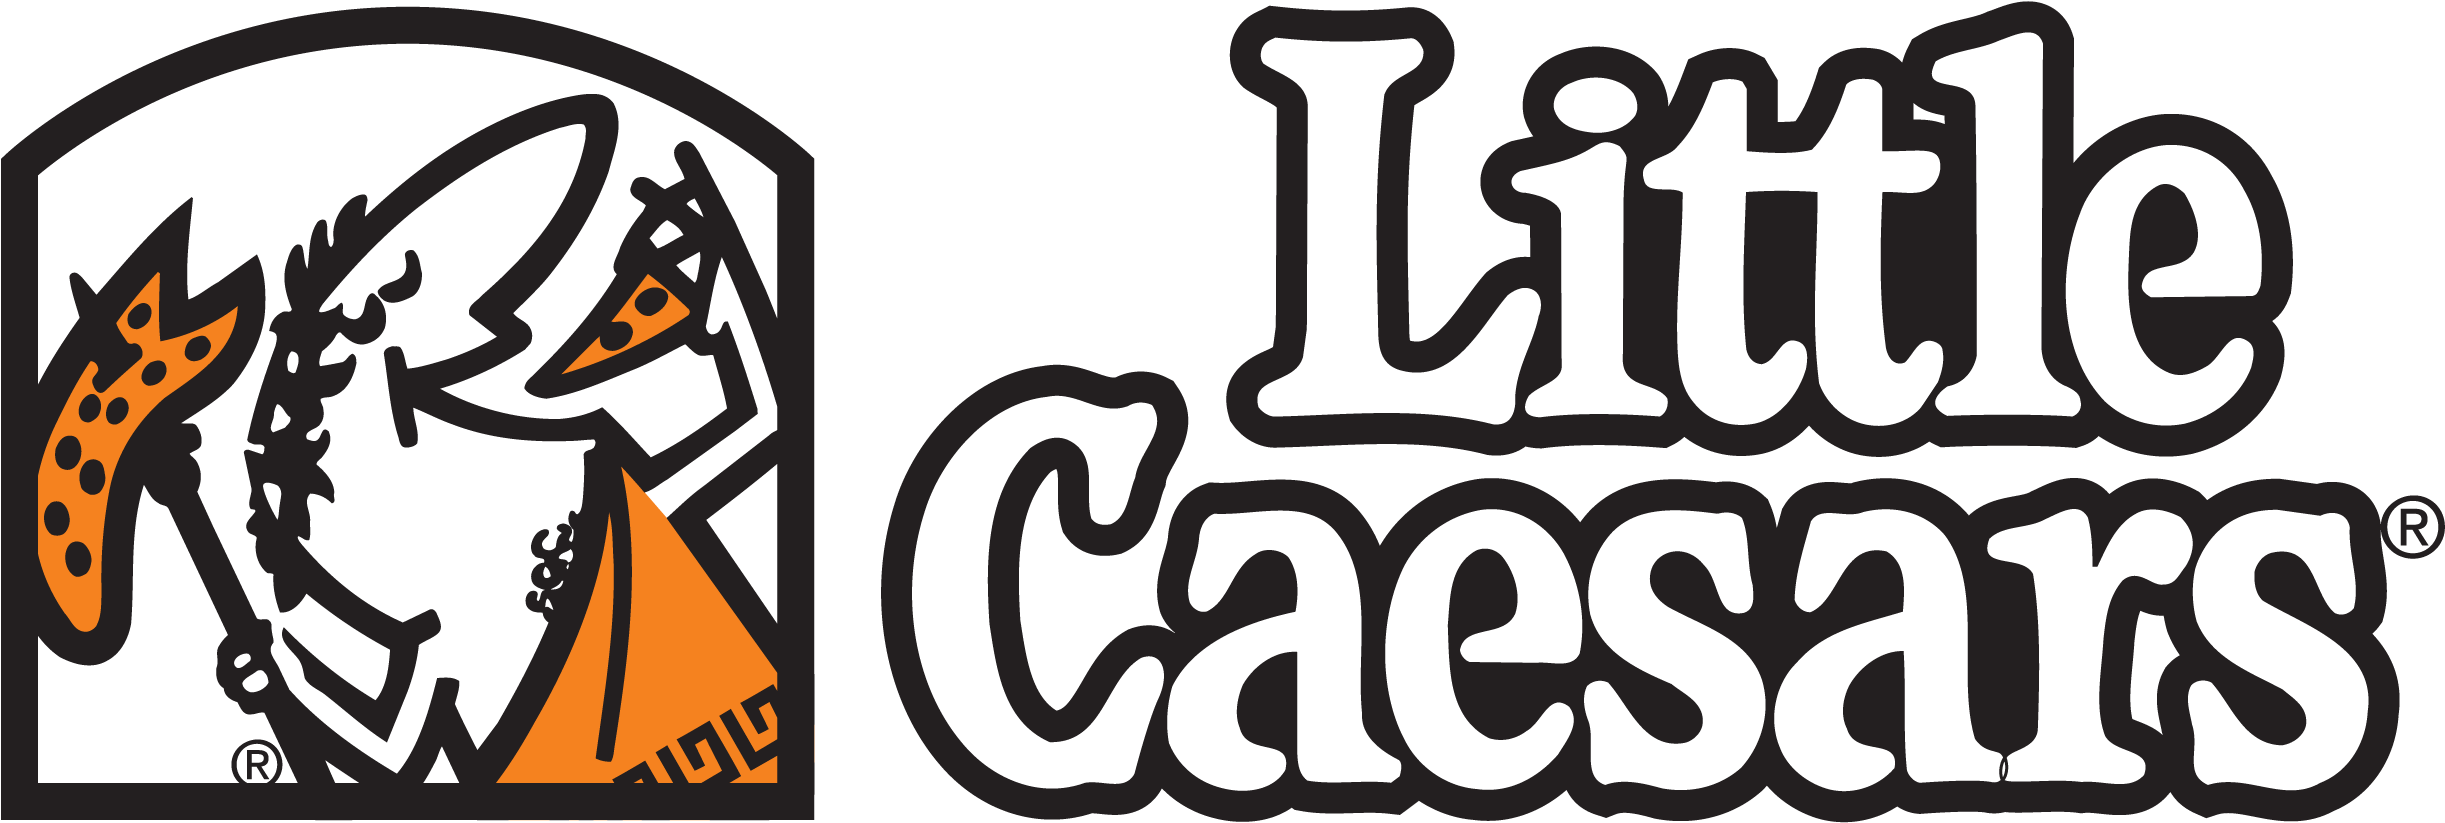 Little Caesars Pizza Clipart.